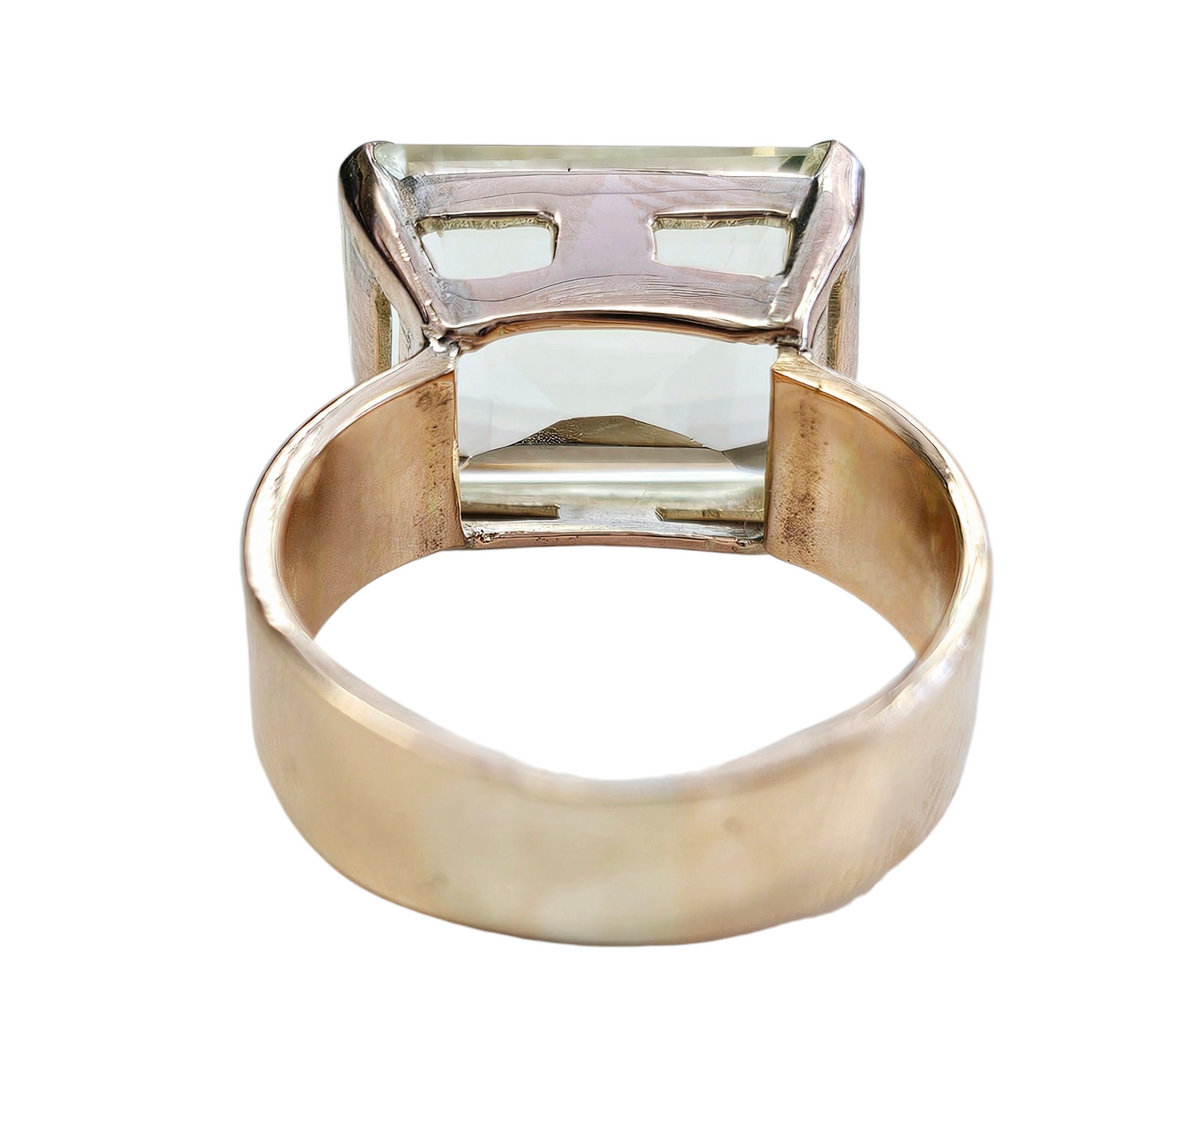 9 CT Emerald Cut Citrine Cocktail Ring made in 14-Karat Rose Gold